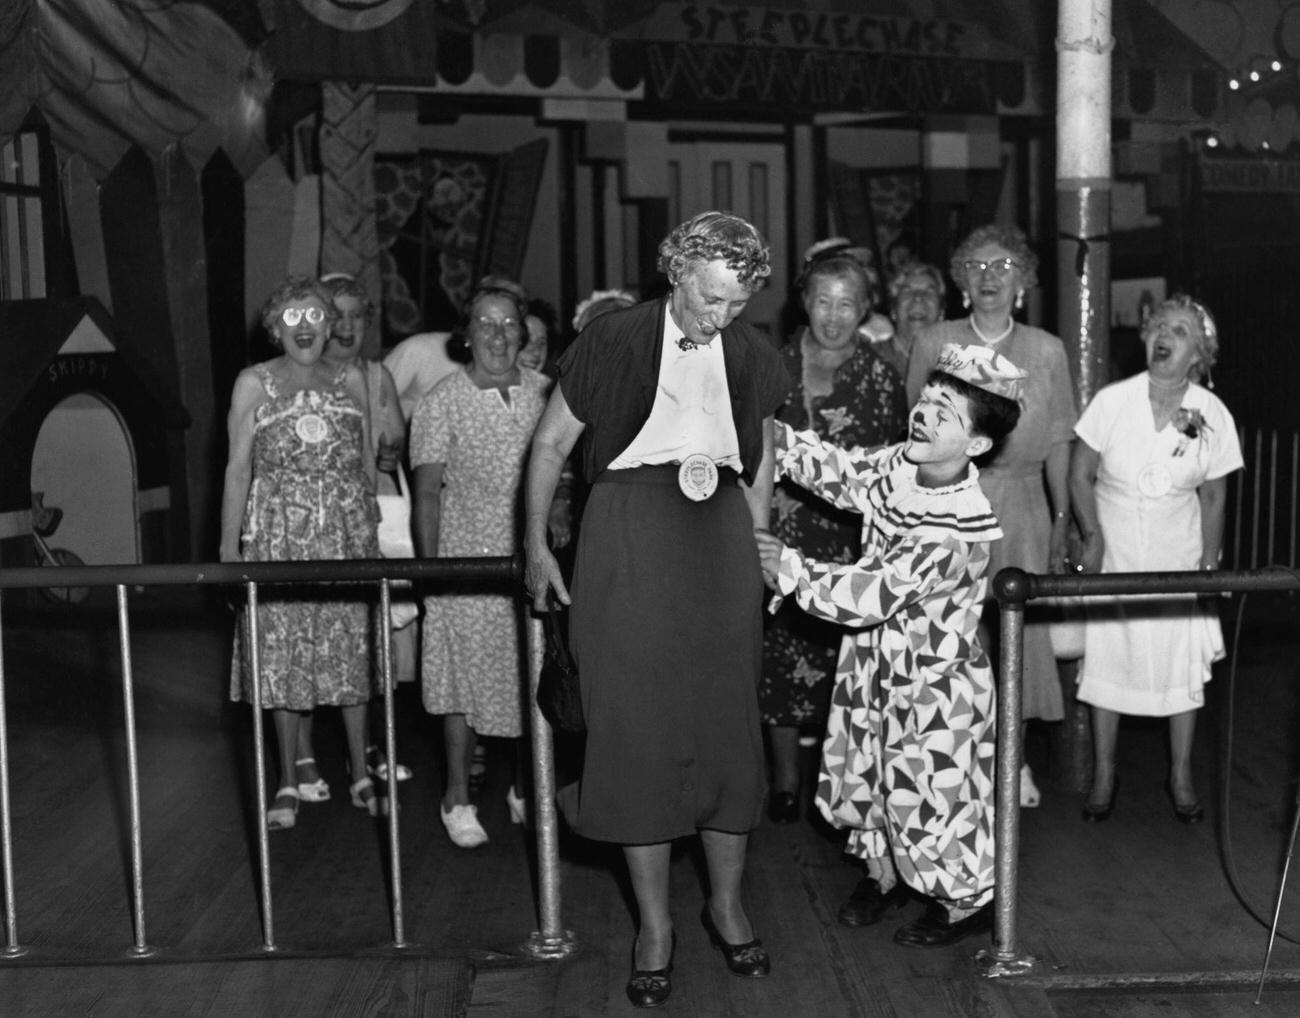 'Grandmas Night Out Club': Elderly Women On Carousel At Steeplechase Park, 1952.